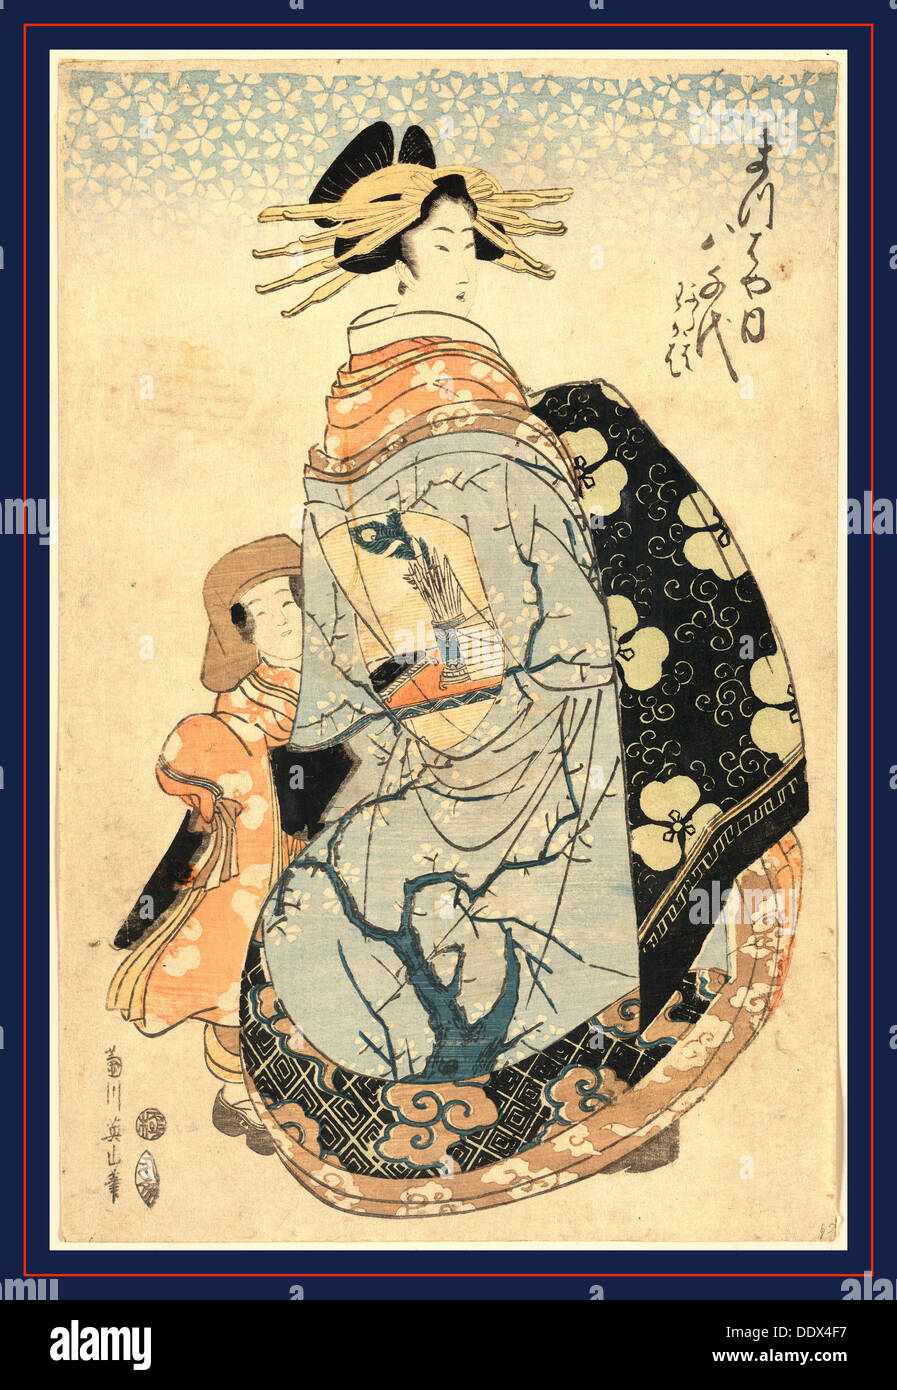 Matsubaya uchi Yachiyo, The courtesan Yachiyo of Matsuba-ya. [between 1809 and 1812], 1 print : woodcut, color ; 36 x 23.5 cm., Stock Photo